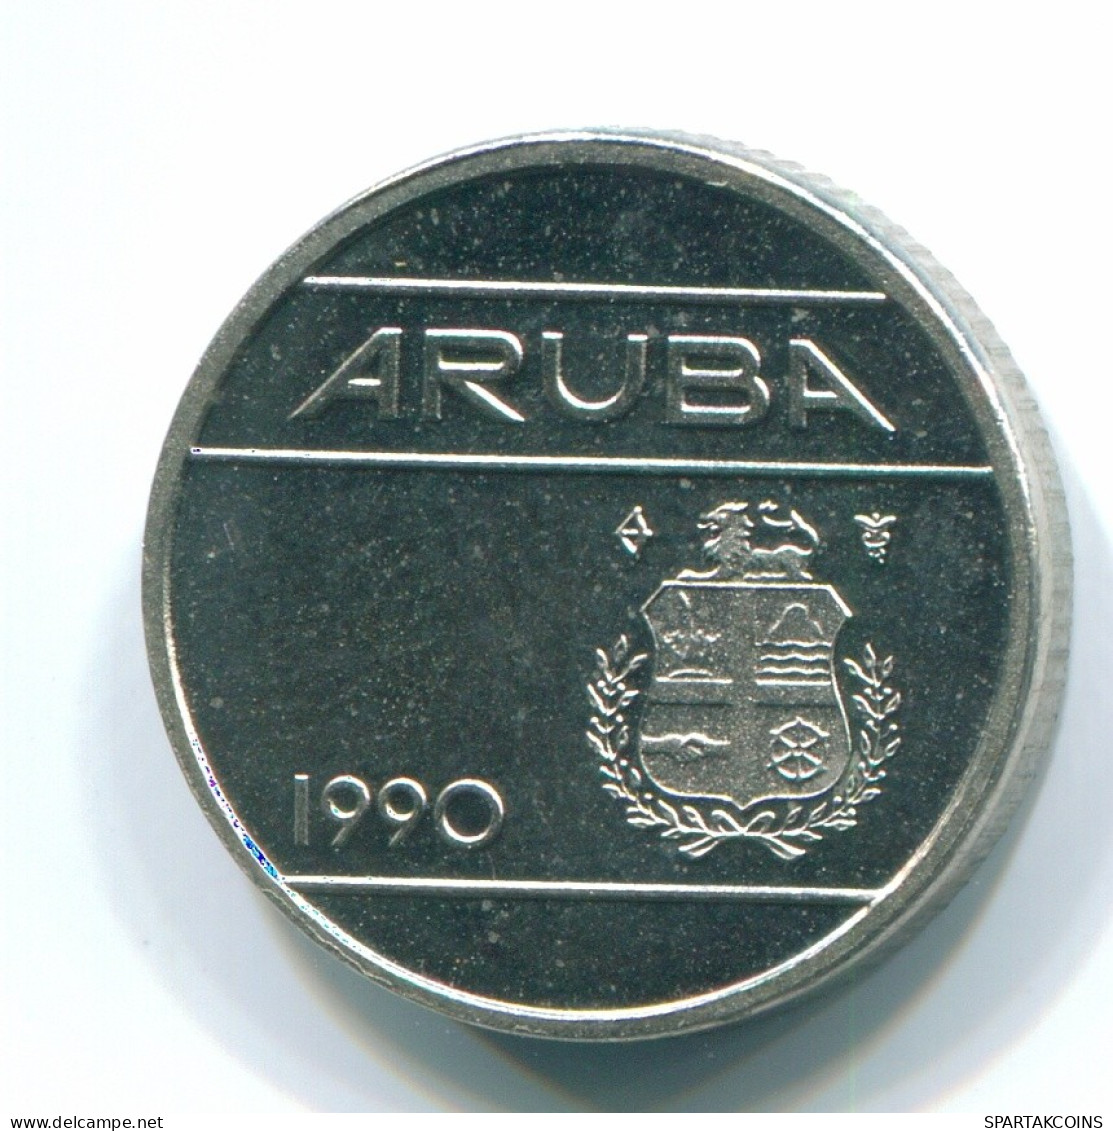 10 CENTS 1990 ARUBA (Netherlands) Nickel Colonial Coin #S13627.U.A - Aruba